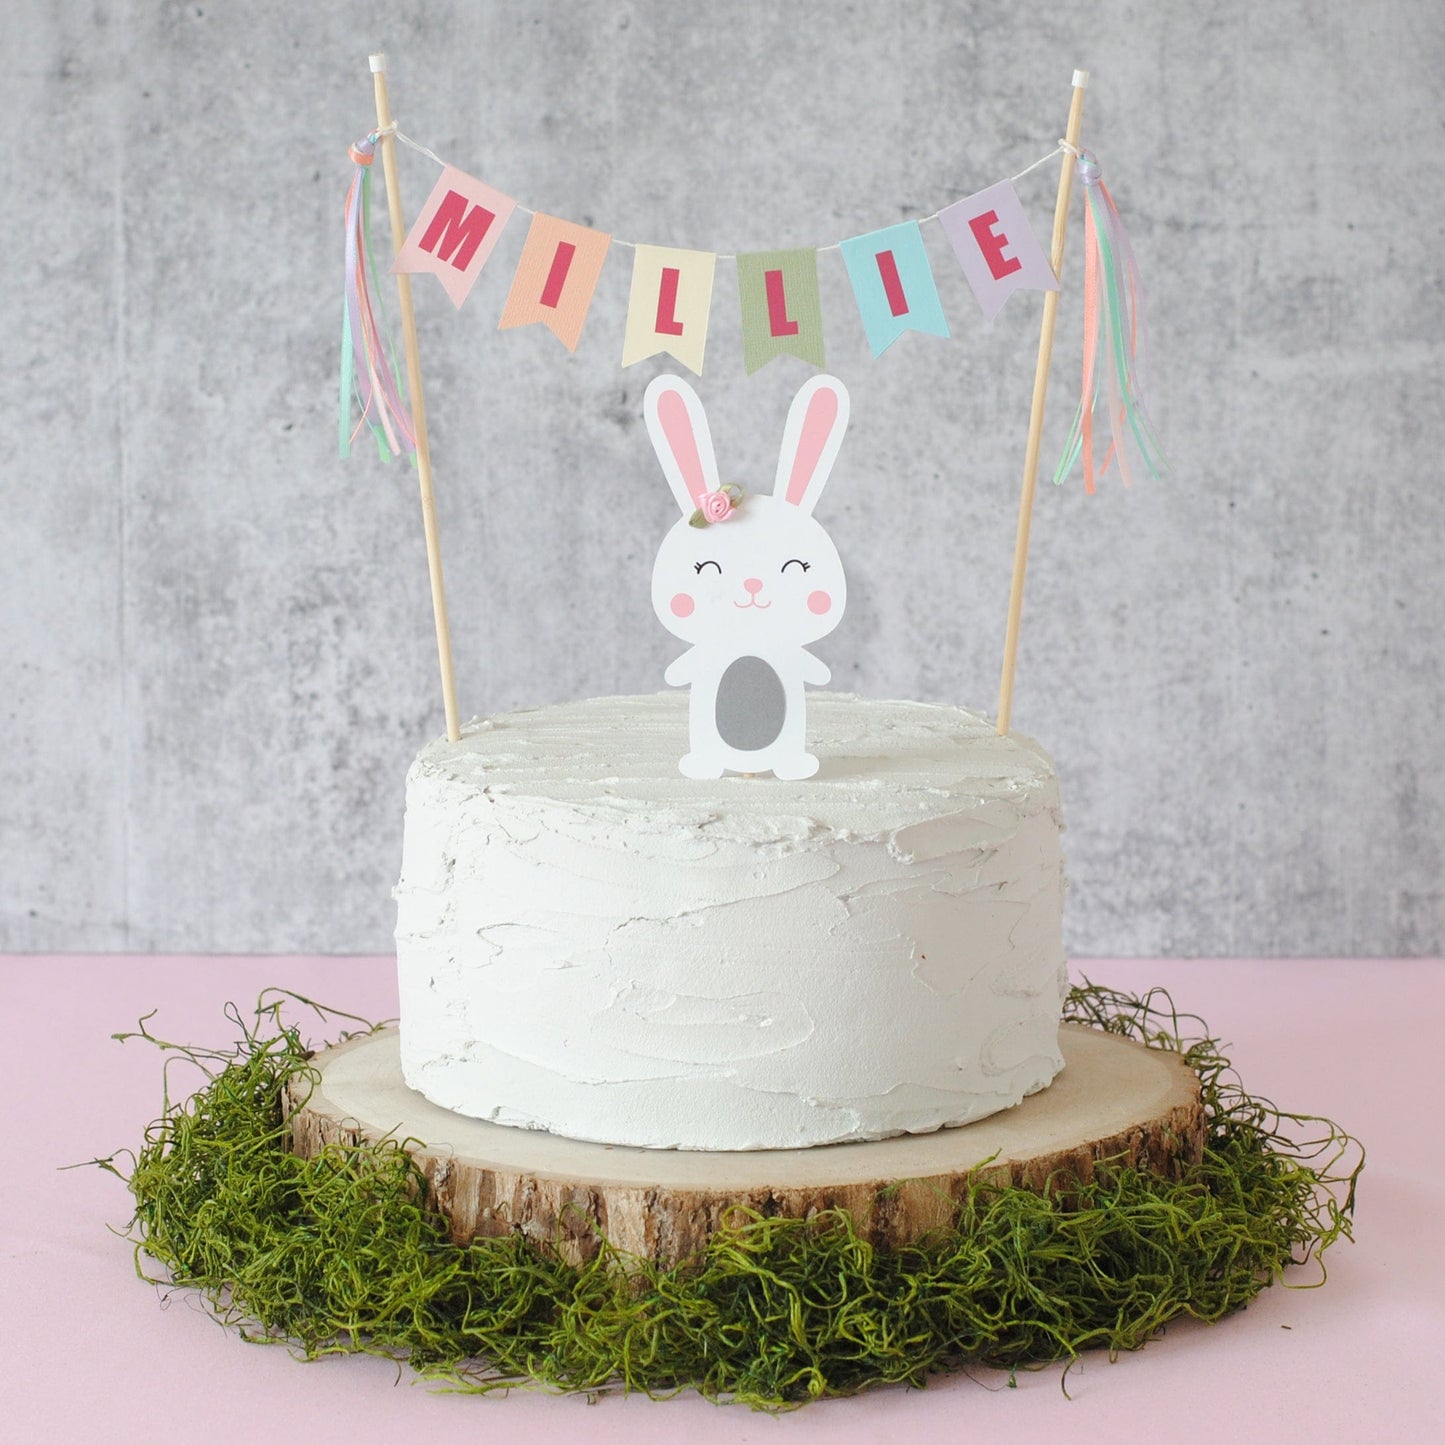 Amazon.com: MyGift Decorative White Ceramic Cake Stand with Rabbit Design,  16-Inch Dessert Serving Tray : Industrial & Scientific